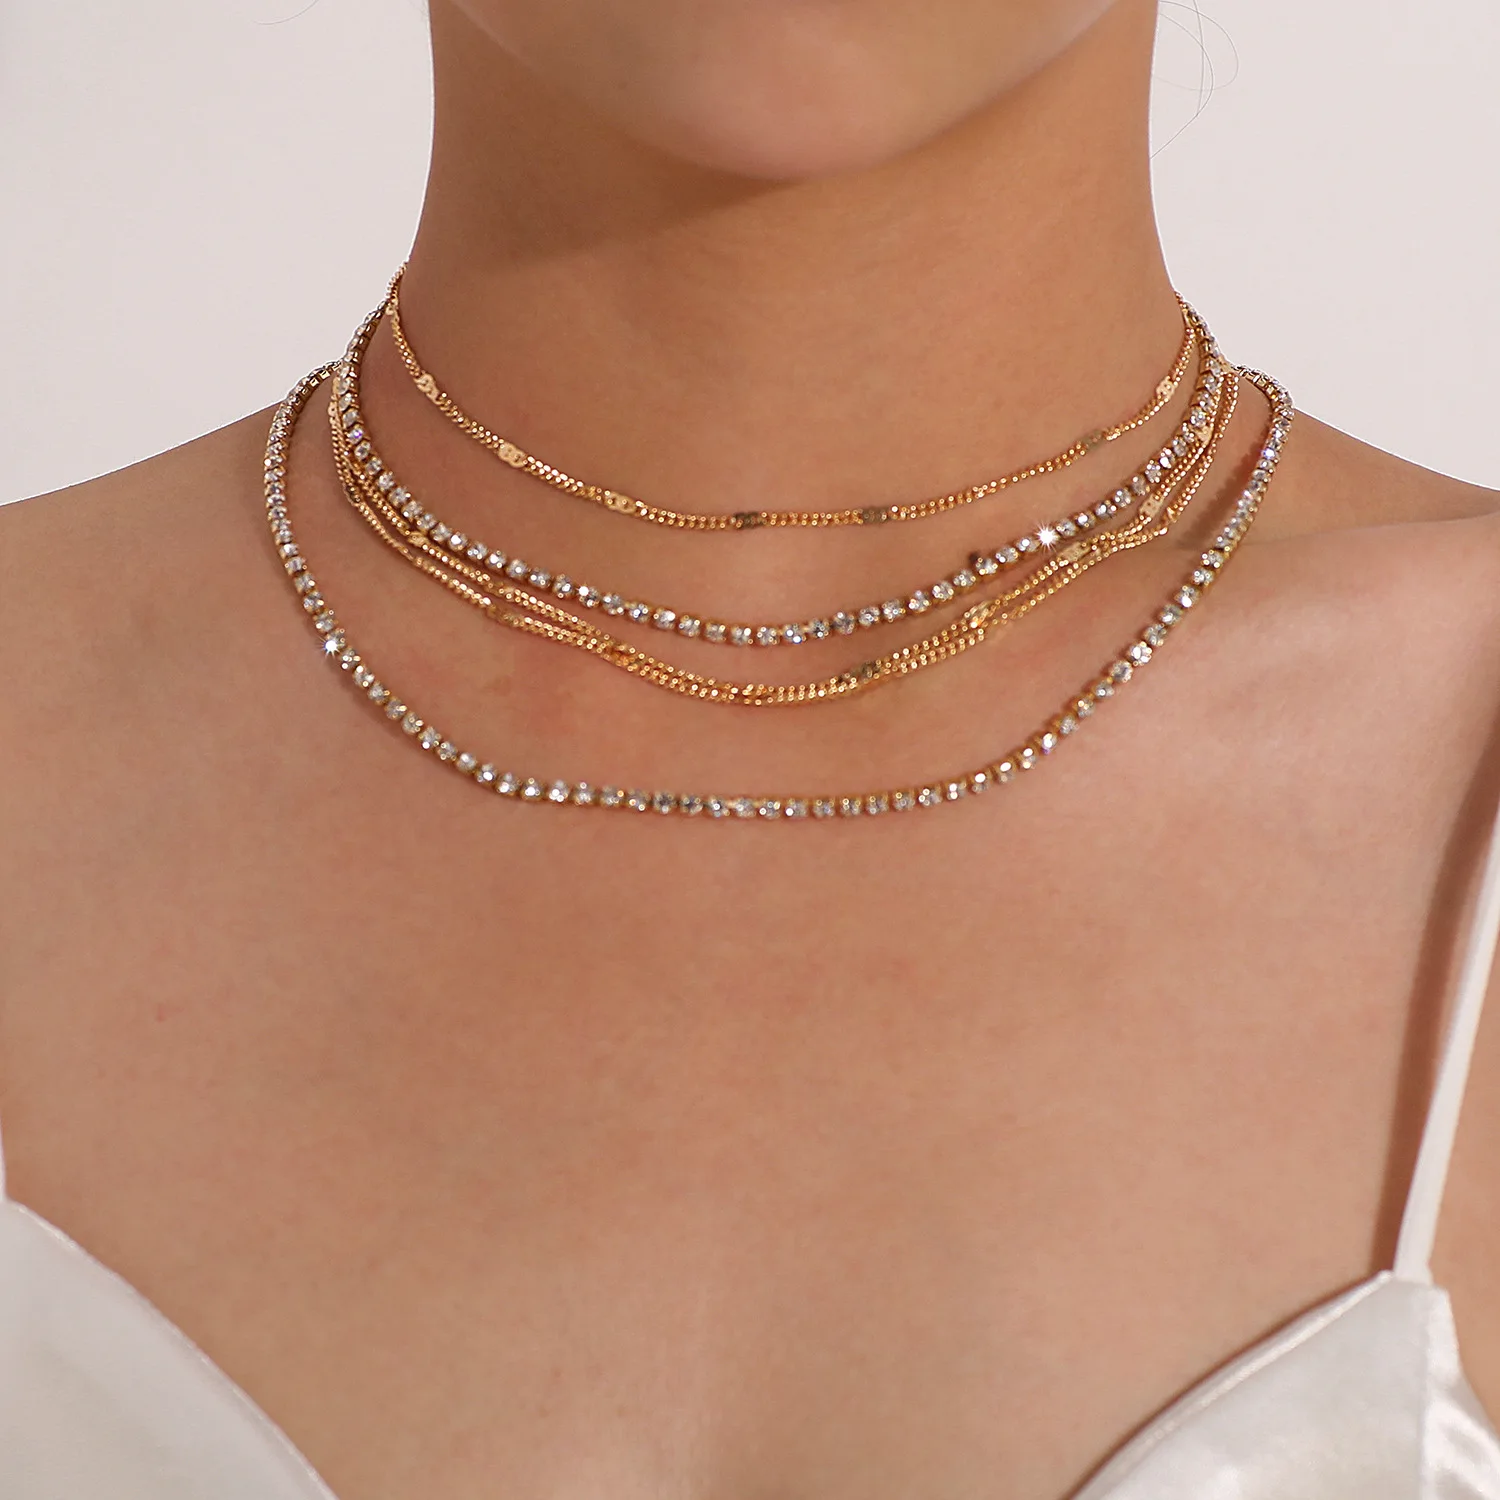 Rhineston Crystal Women Choker Charm Chain Chunky Necklace Jewelry Pendant 